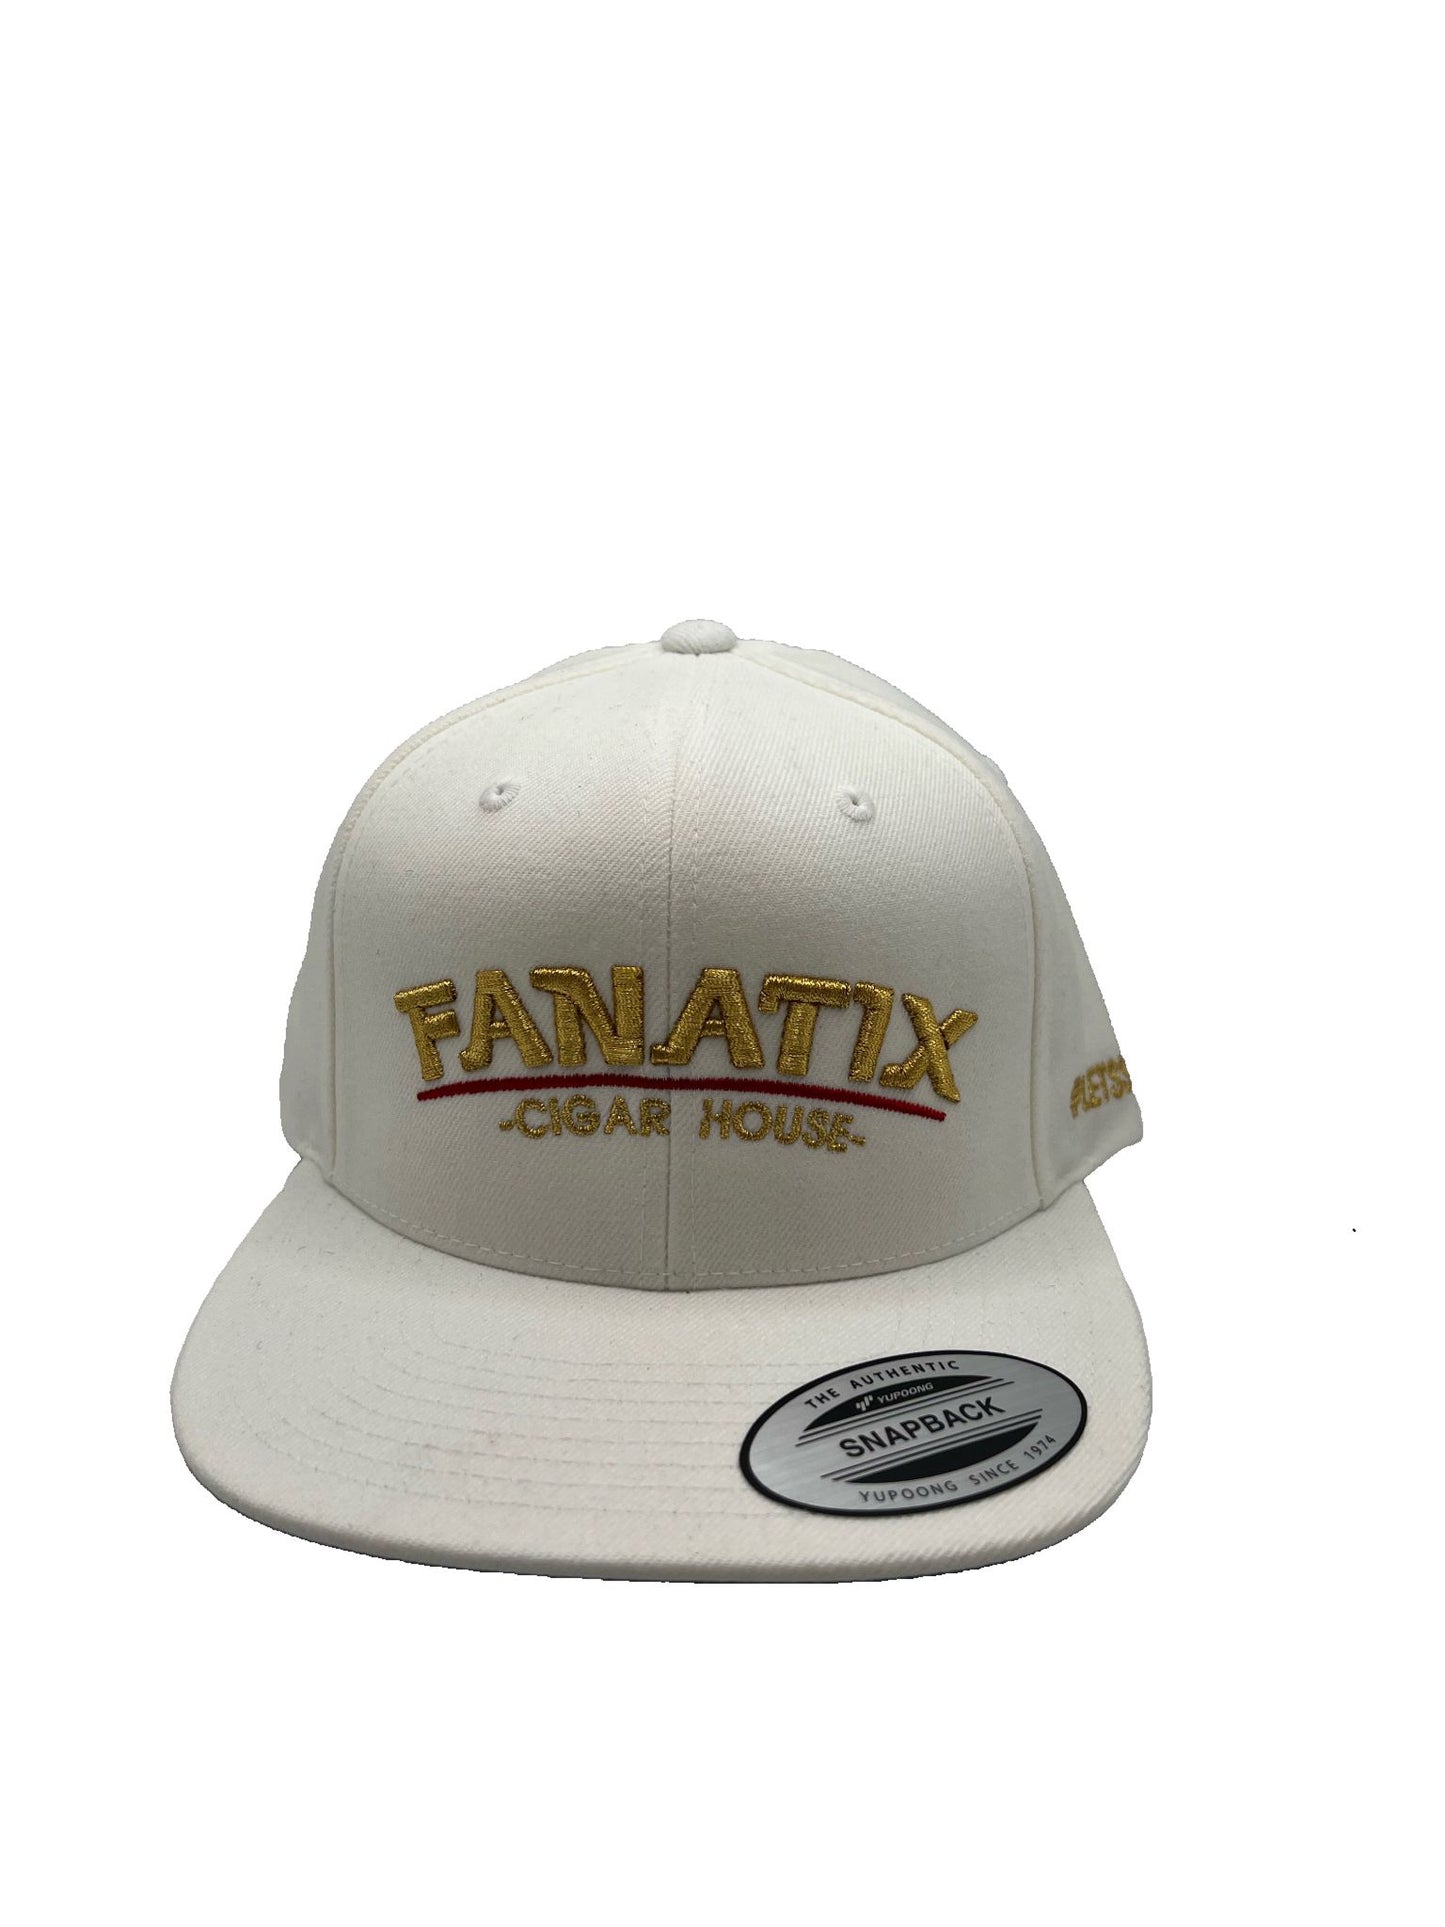 Fanatix Cigar House Hat - White